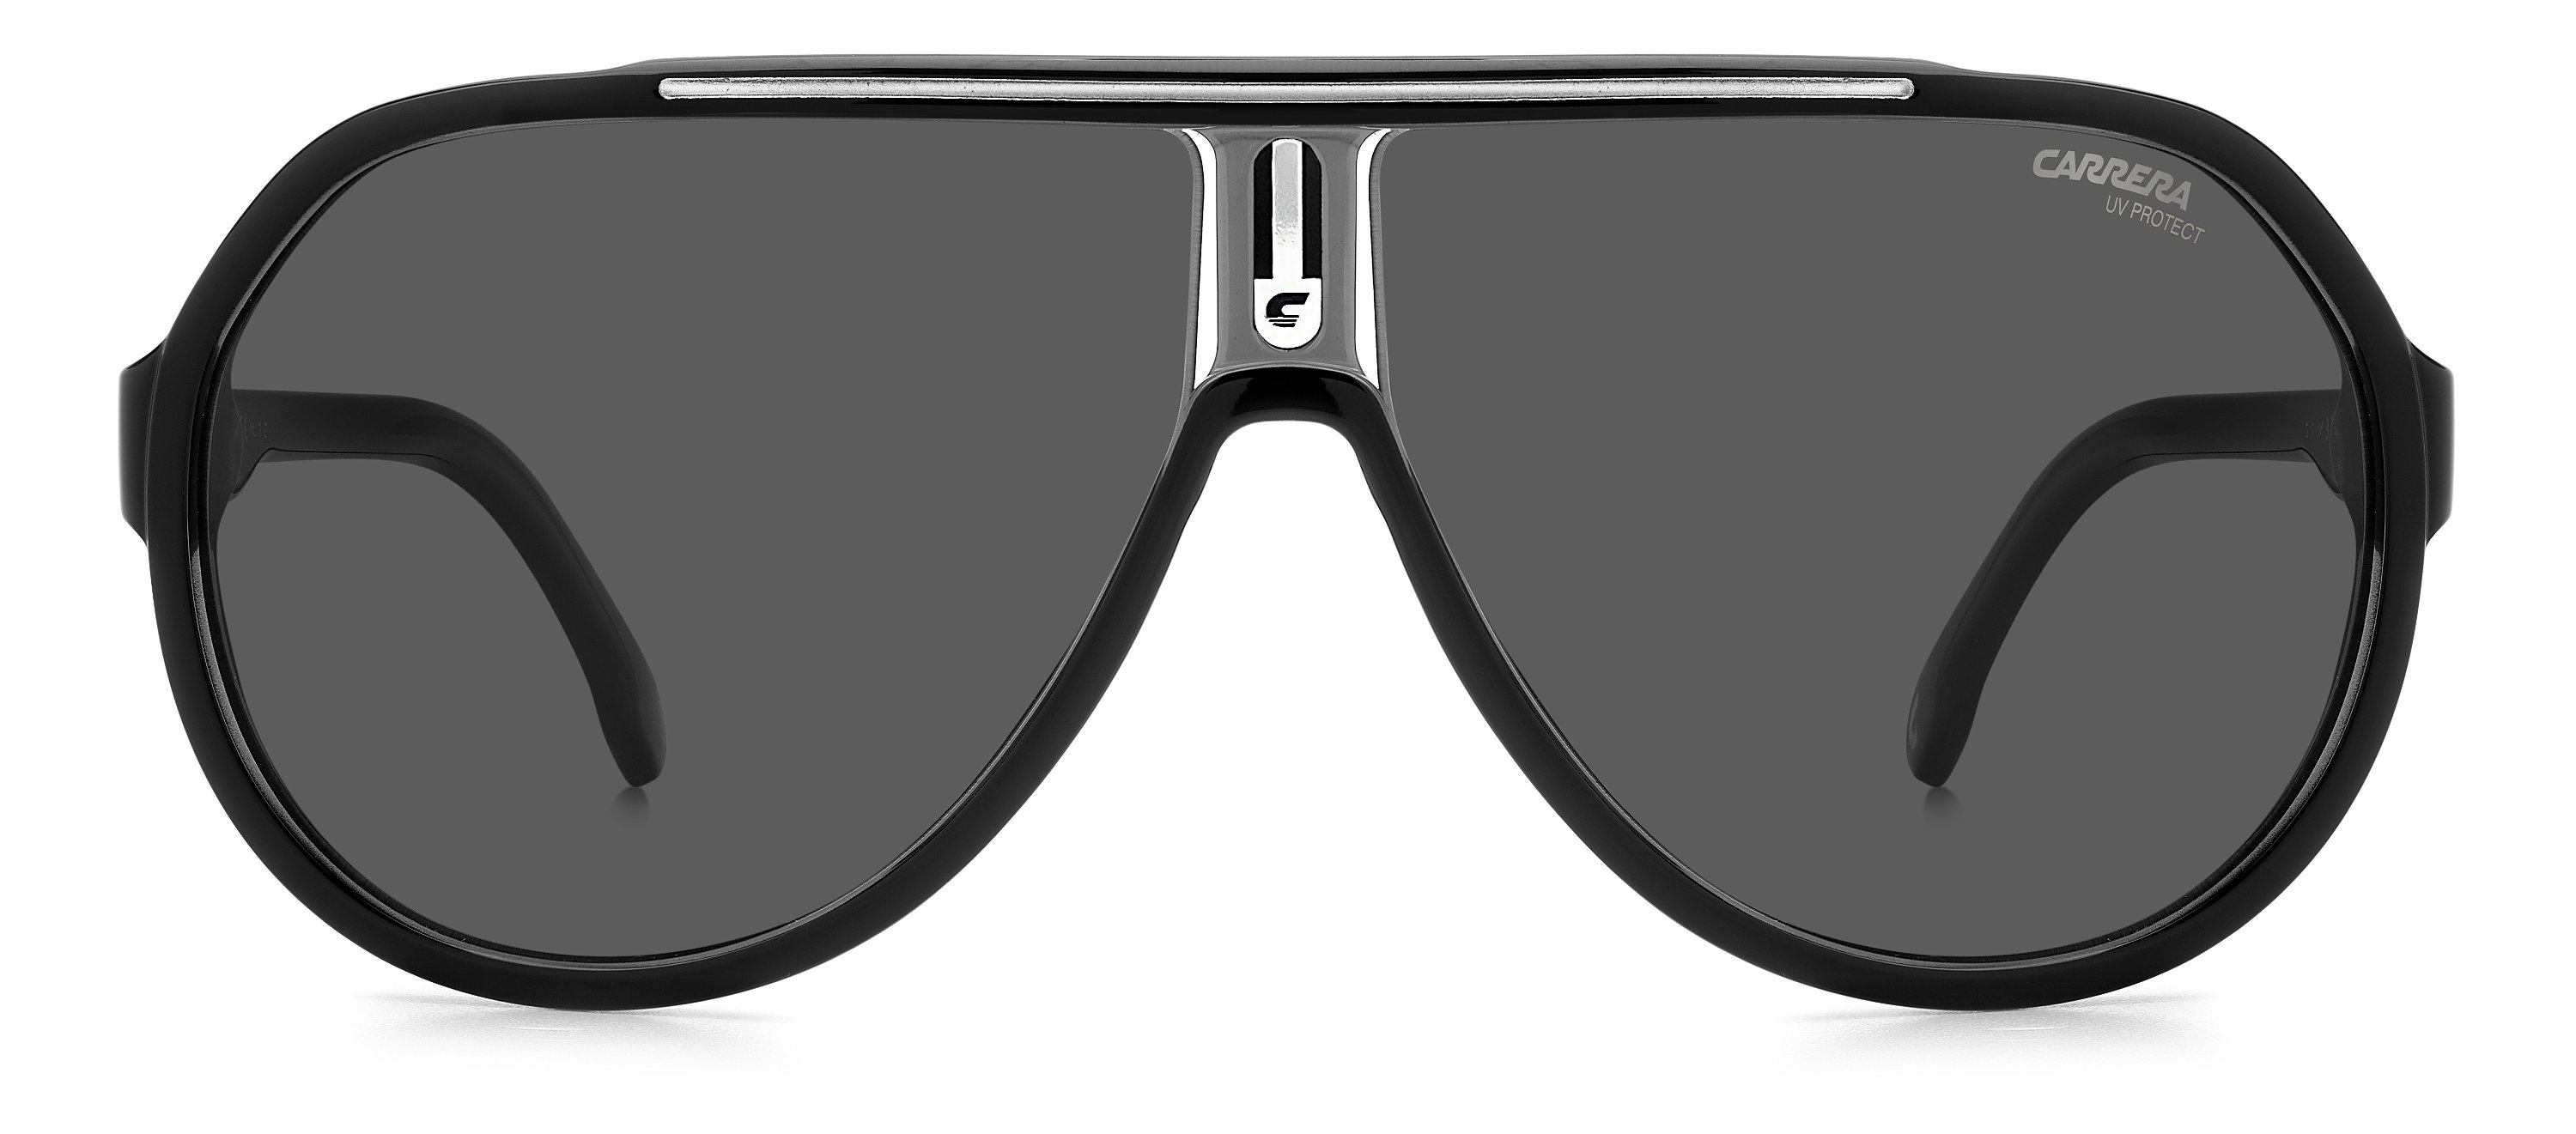 Carrera Sonnenbrille 1057/S 08A schwarz grau